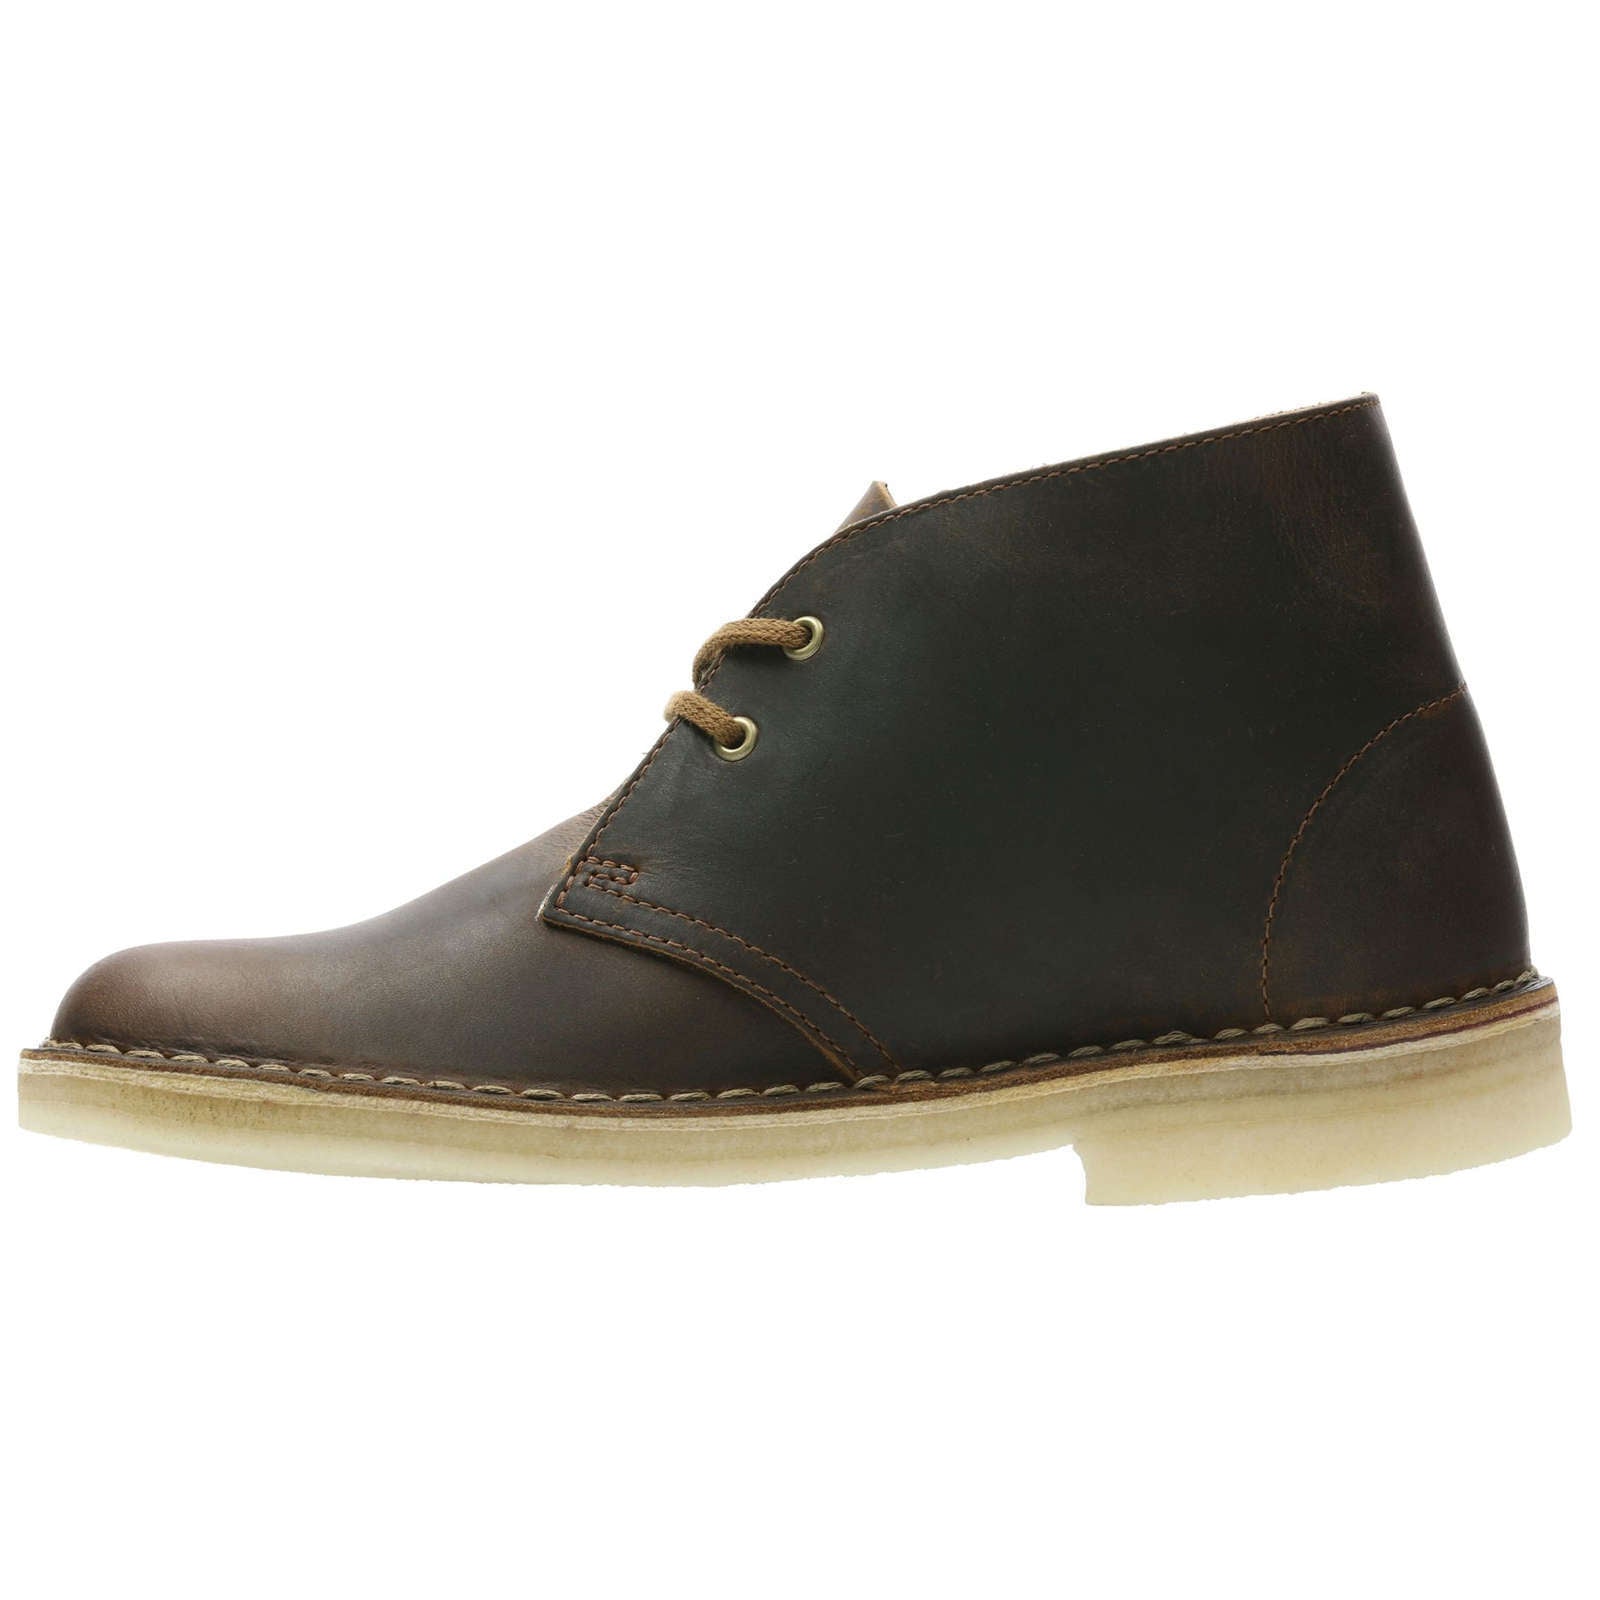 Clarks Originals Desert Boot Leather Women's Boots#color_beeswax